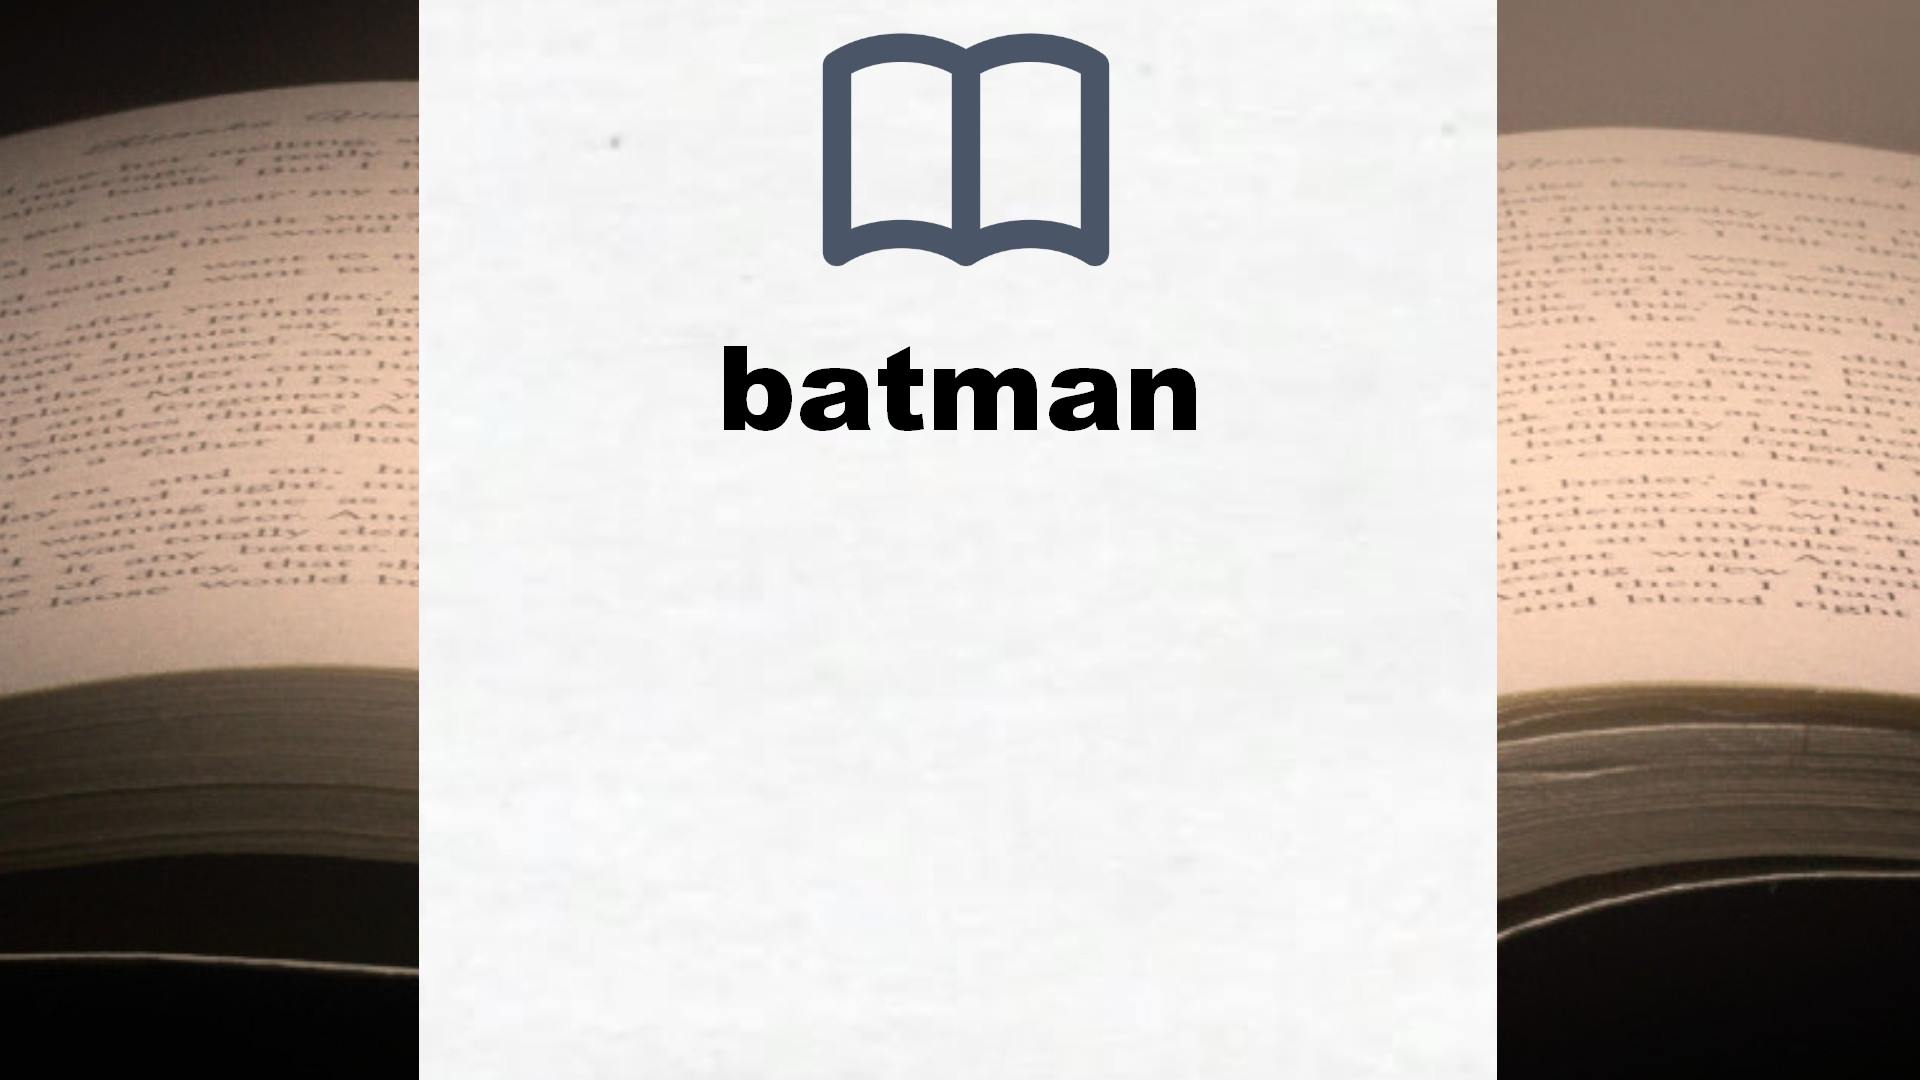 Libros sobre batman